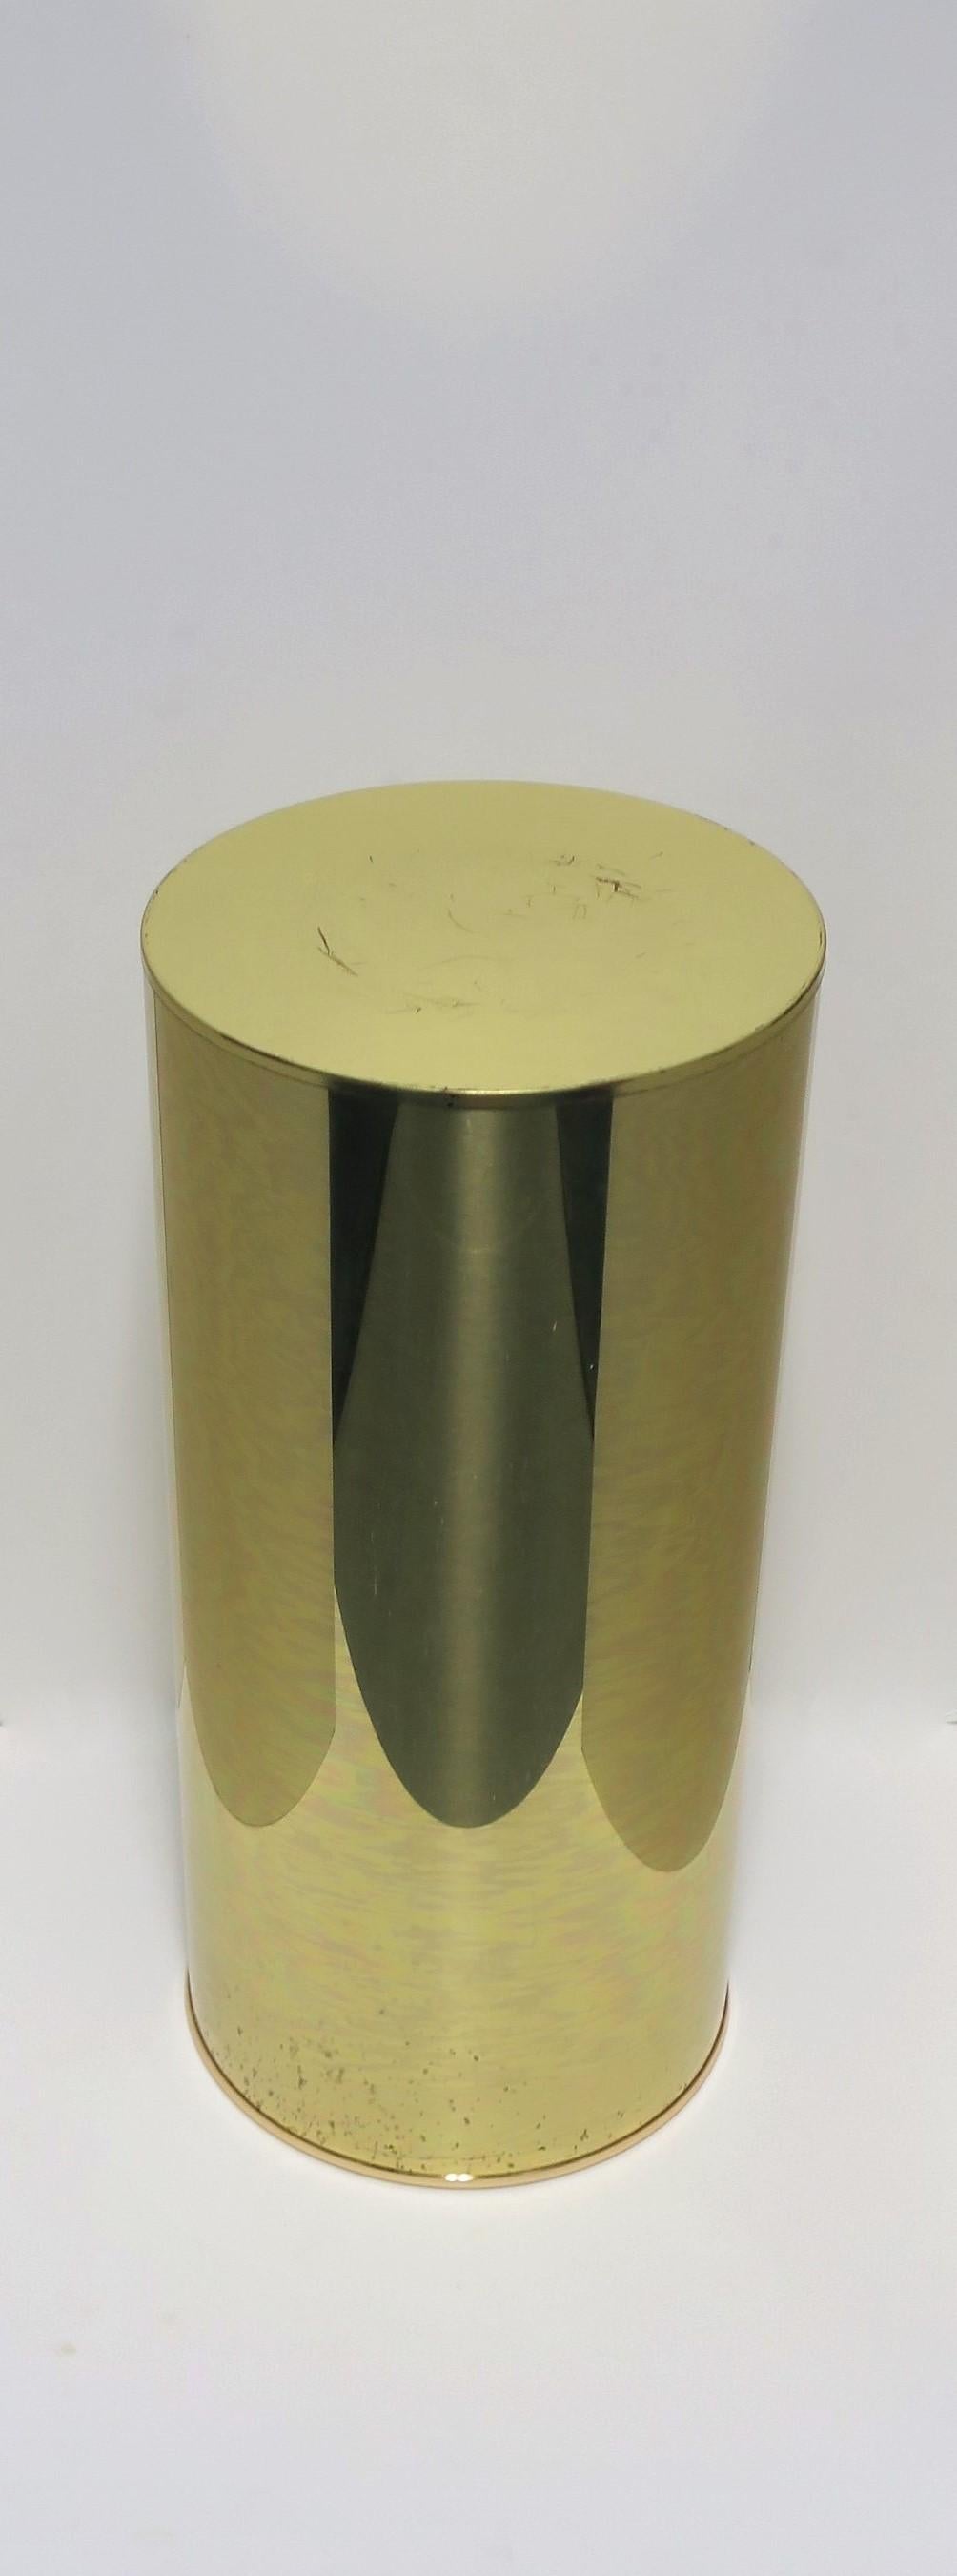 American Modern Brass Pedestal Column Pillar Stand Signed by Designers C. Jere For Sale